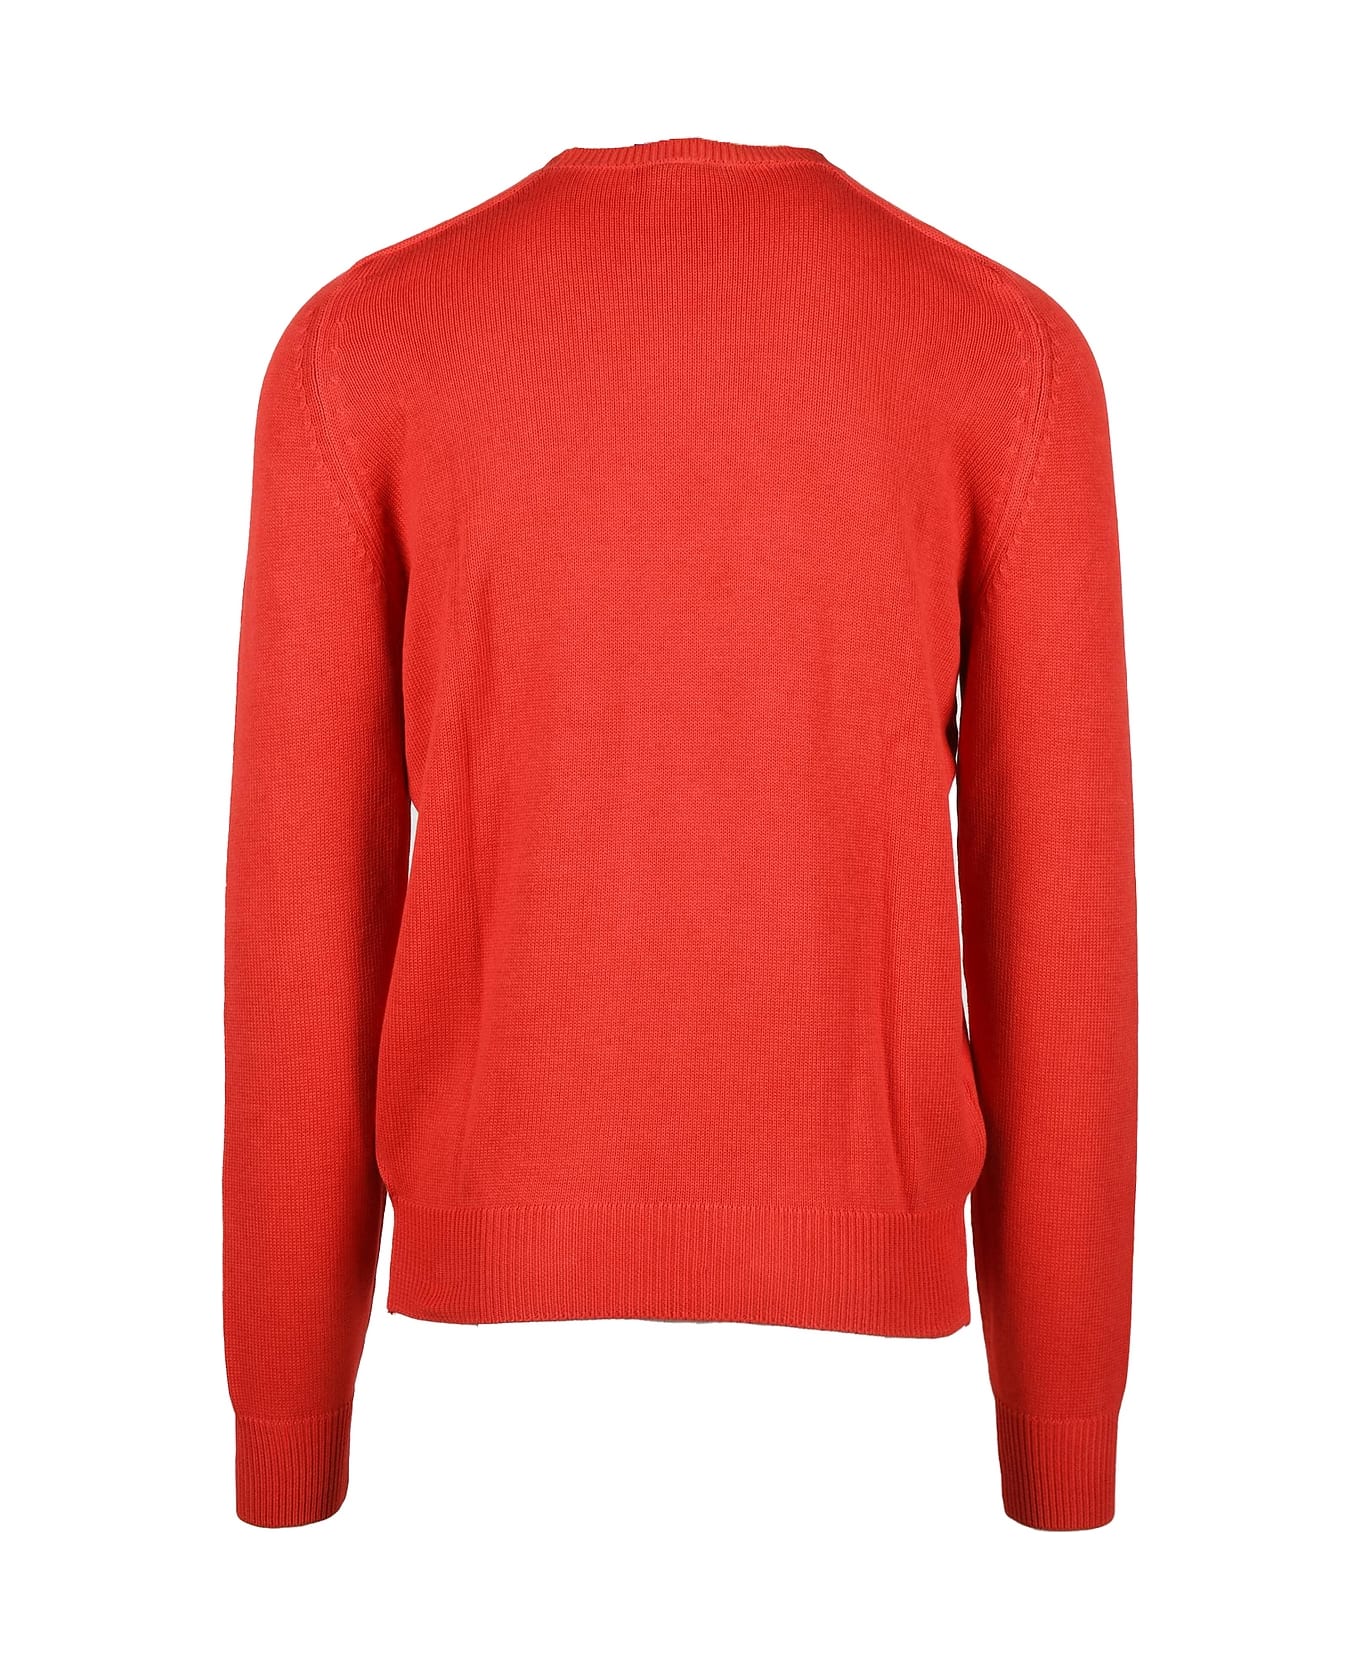 North Sails Men's Brick Sweater - Red